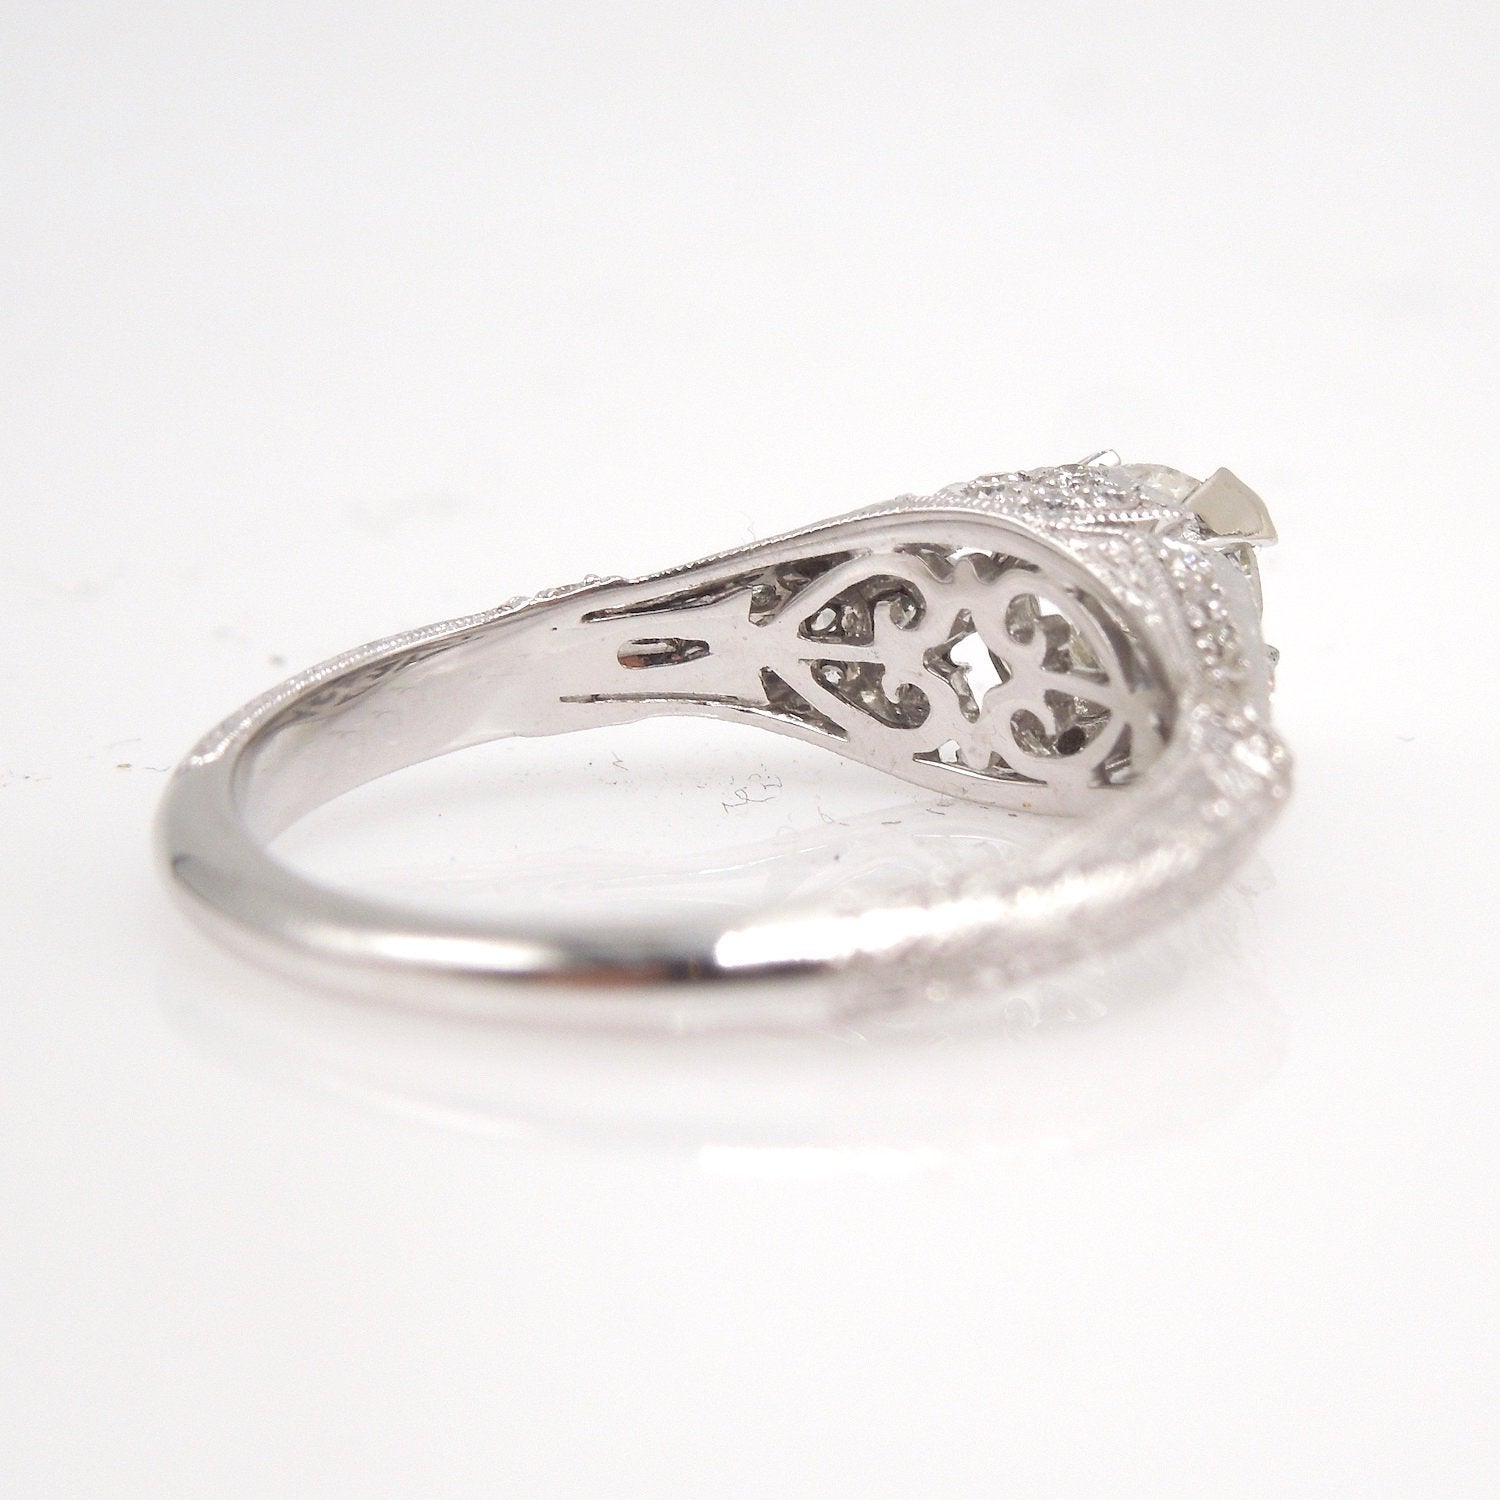 Half Carat Diamond in Petite, Diamond Encrusted Art Deco Style Engagement Ring - 14K White Gold